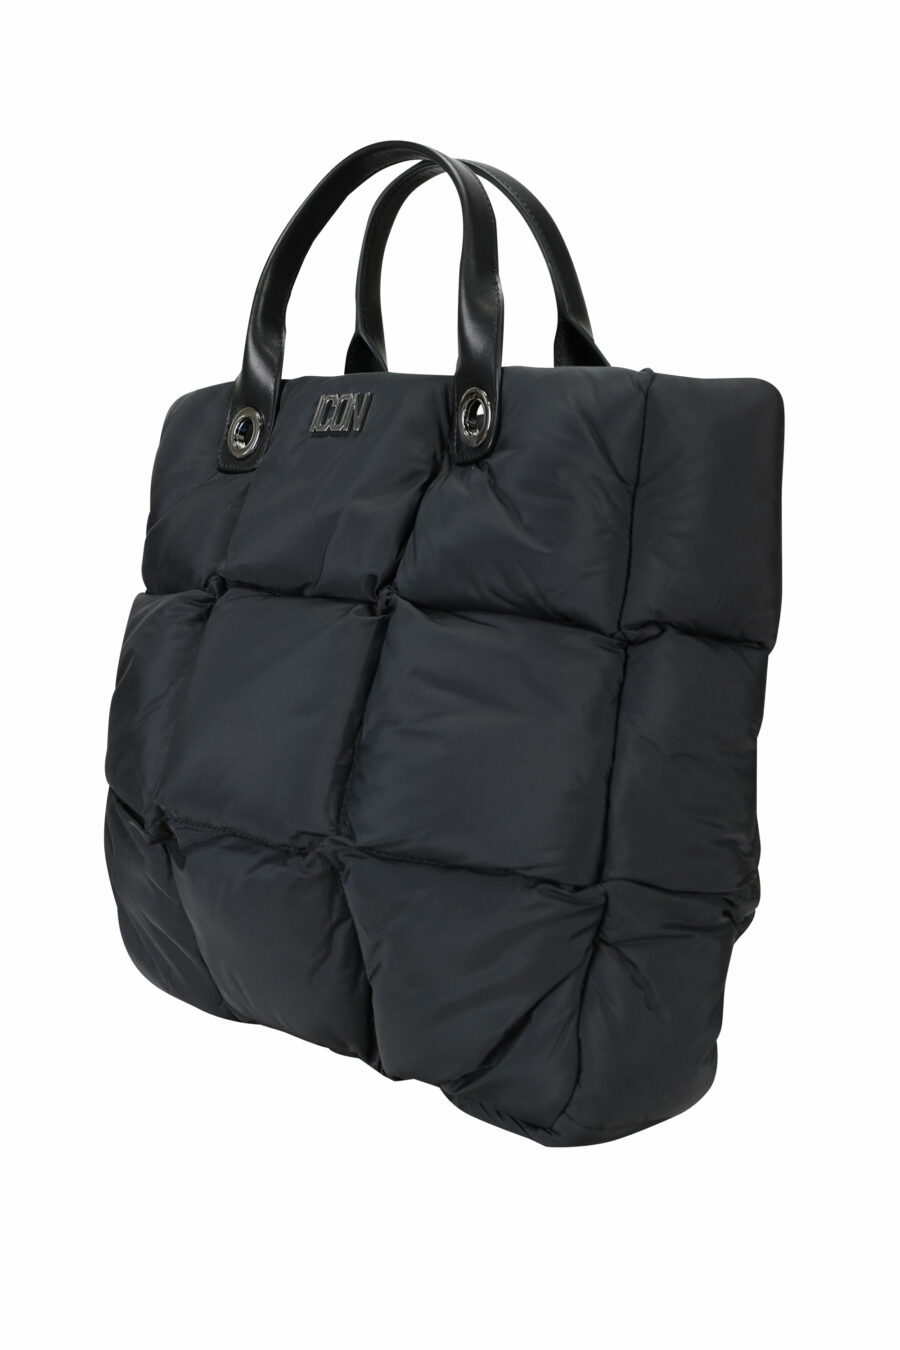 Black shopper bag with metal logo - 8055777276341 3